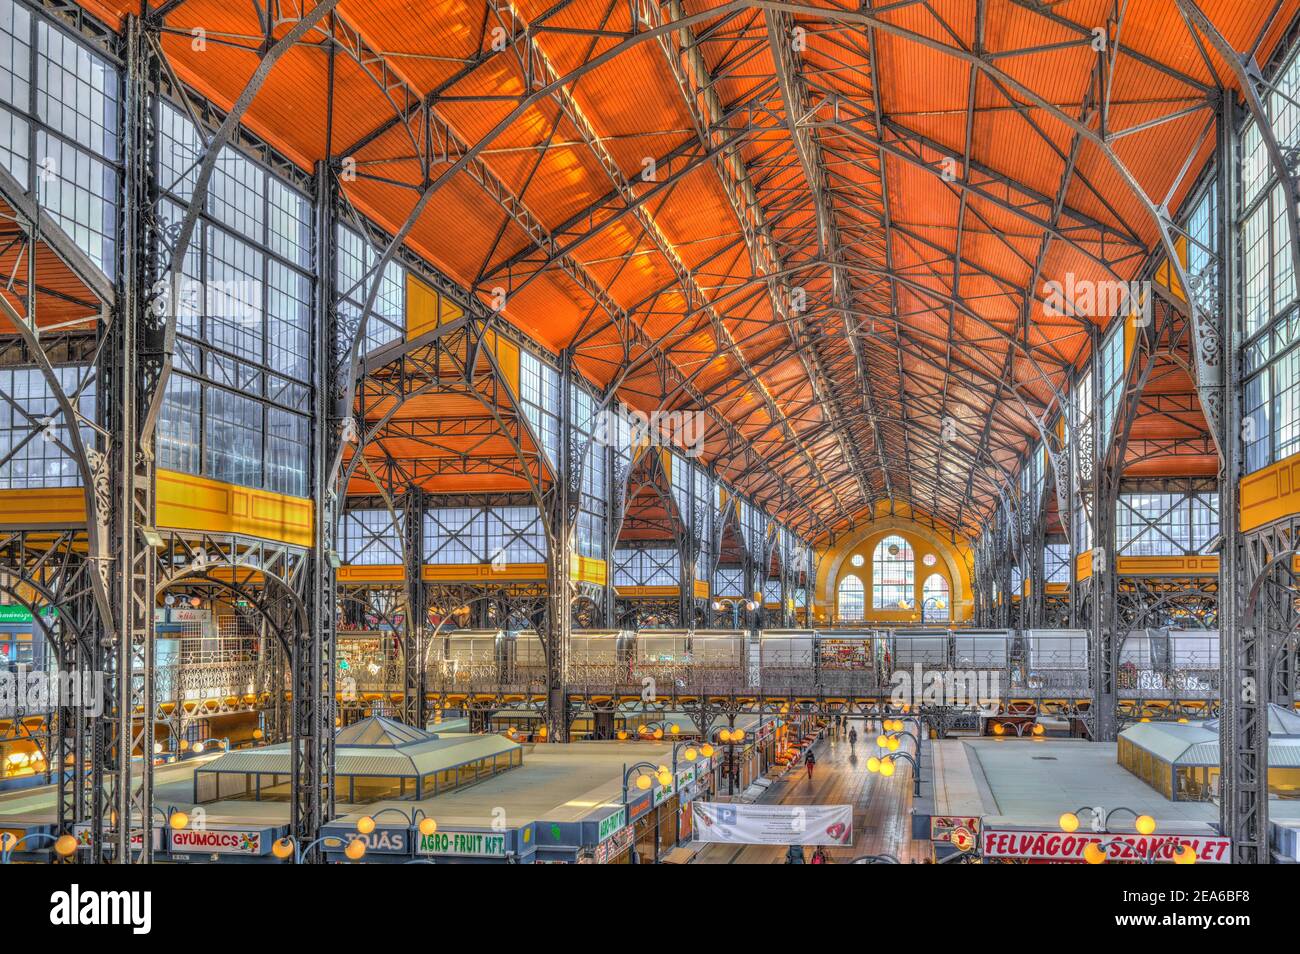 Great Market Hall, Budapest, HDR Image Stock Photo